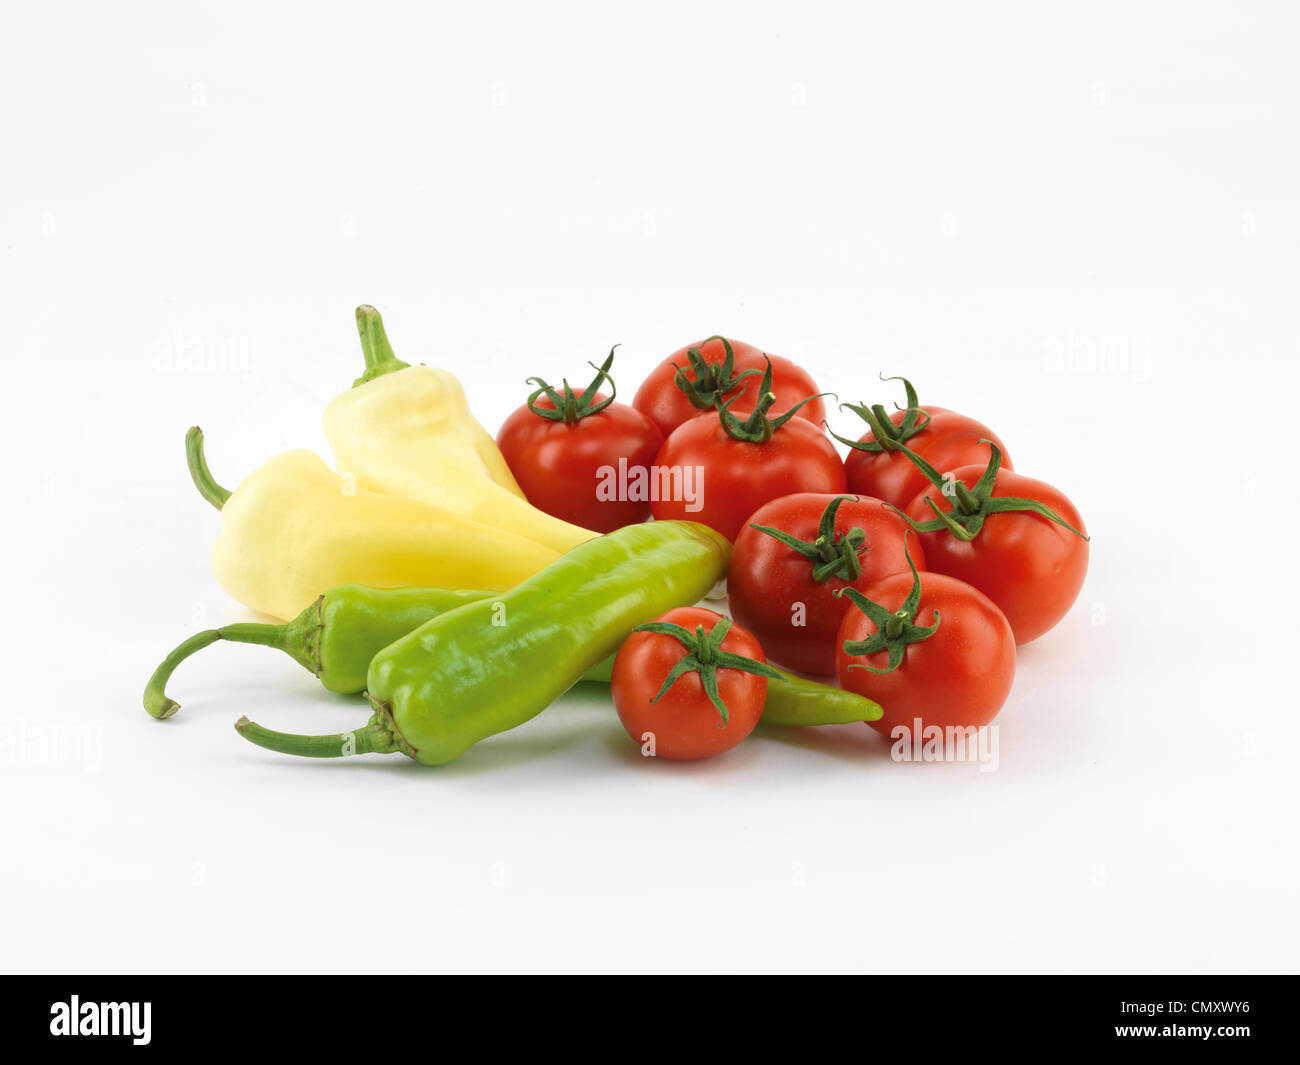 paprika,pepper,chili pepper,tomatoes Stock Photo